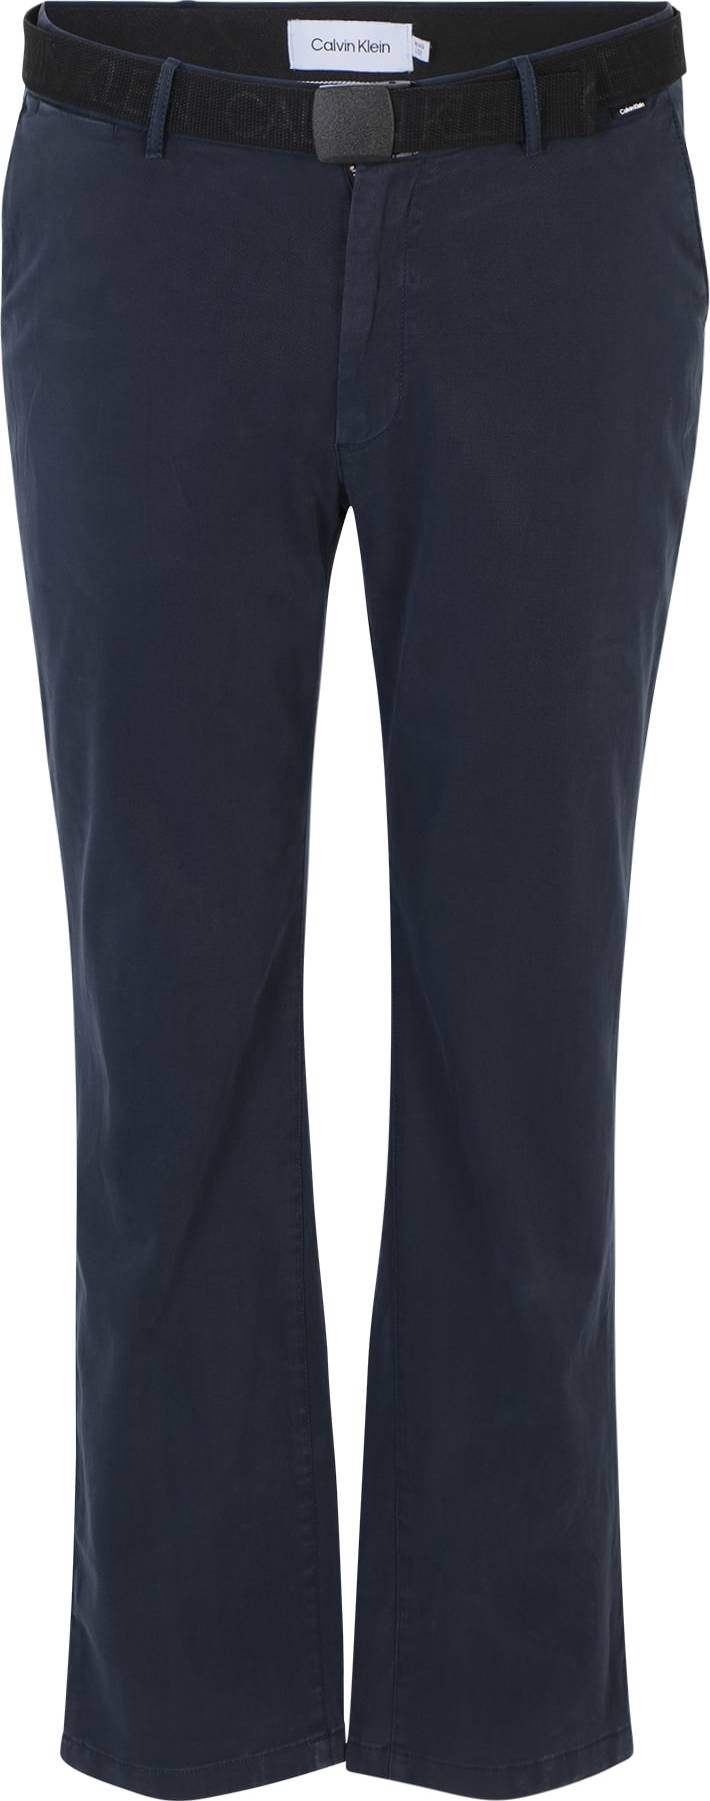 Calvin Klein Big & Tall Chino kalhoty námořnická modř